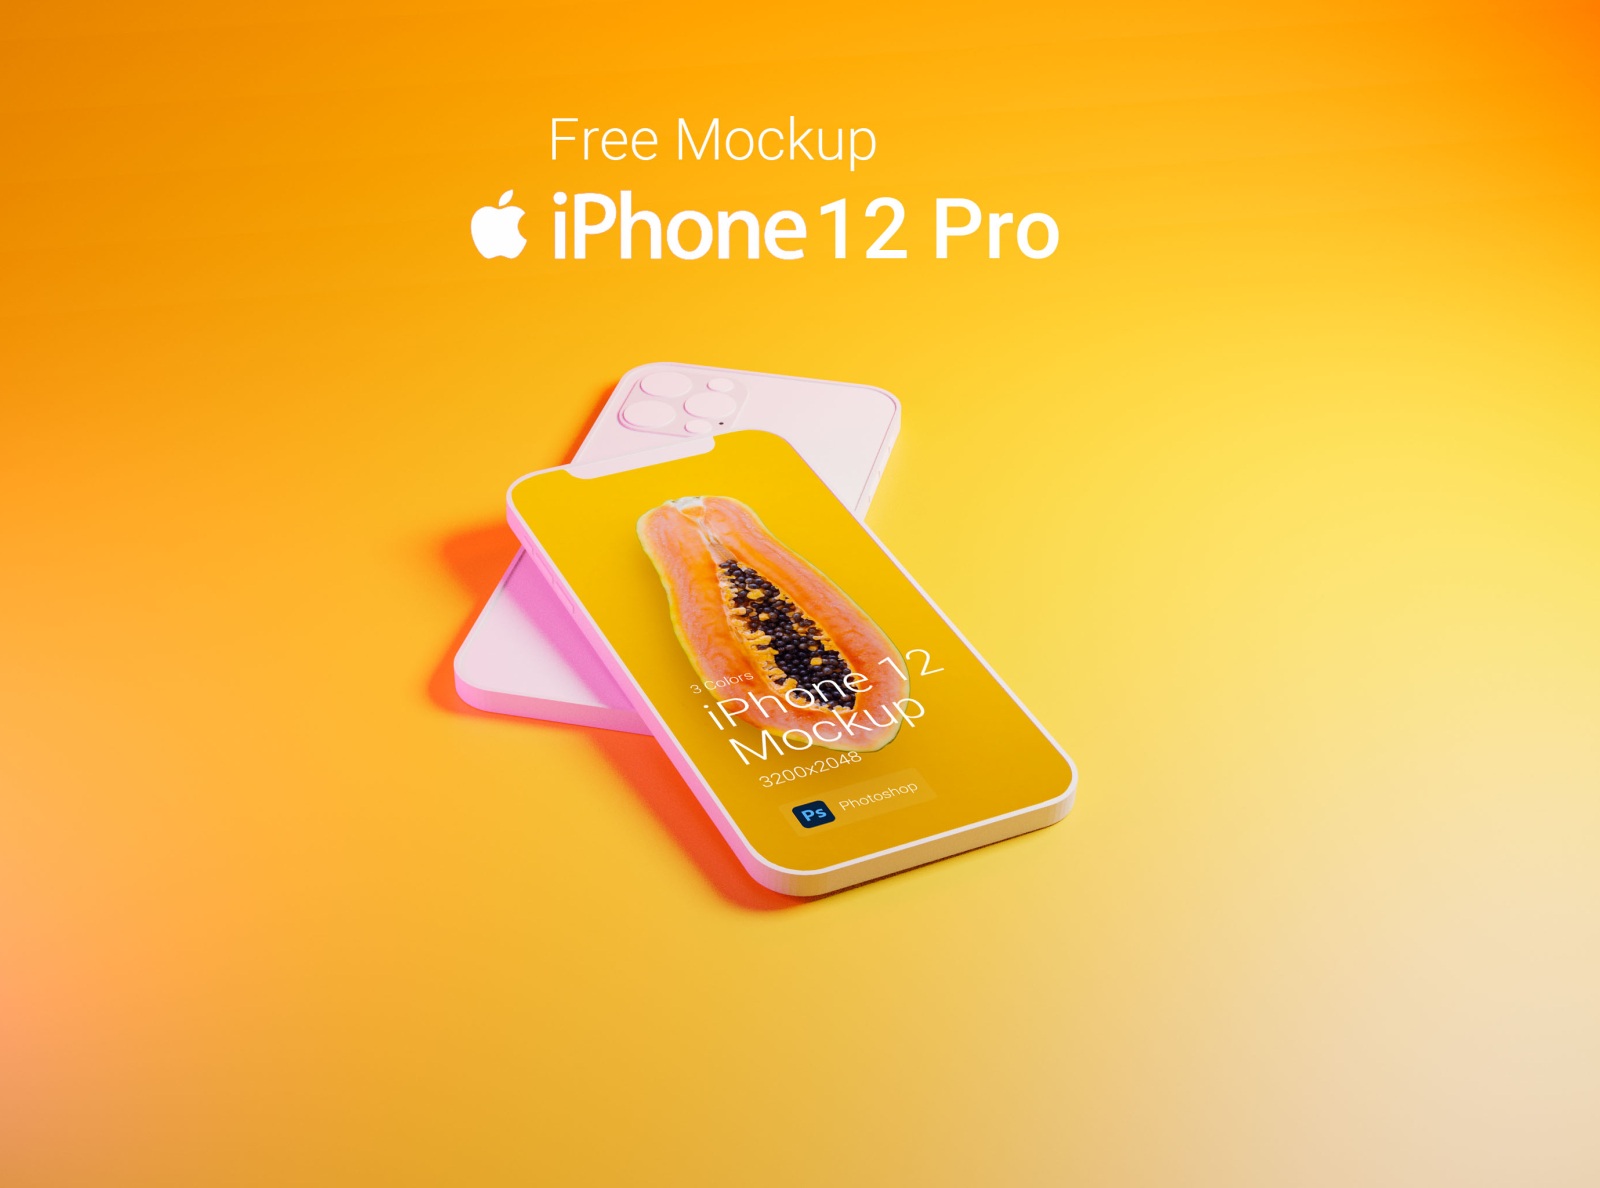 Download iPhone 12 Pro Free Mockup by Anton Goldobin on Dribbble